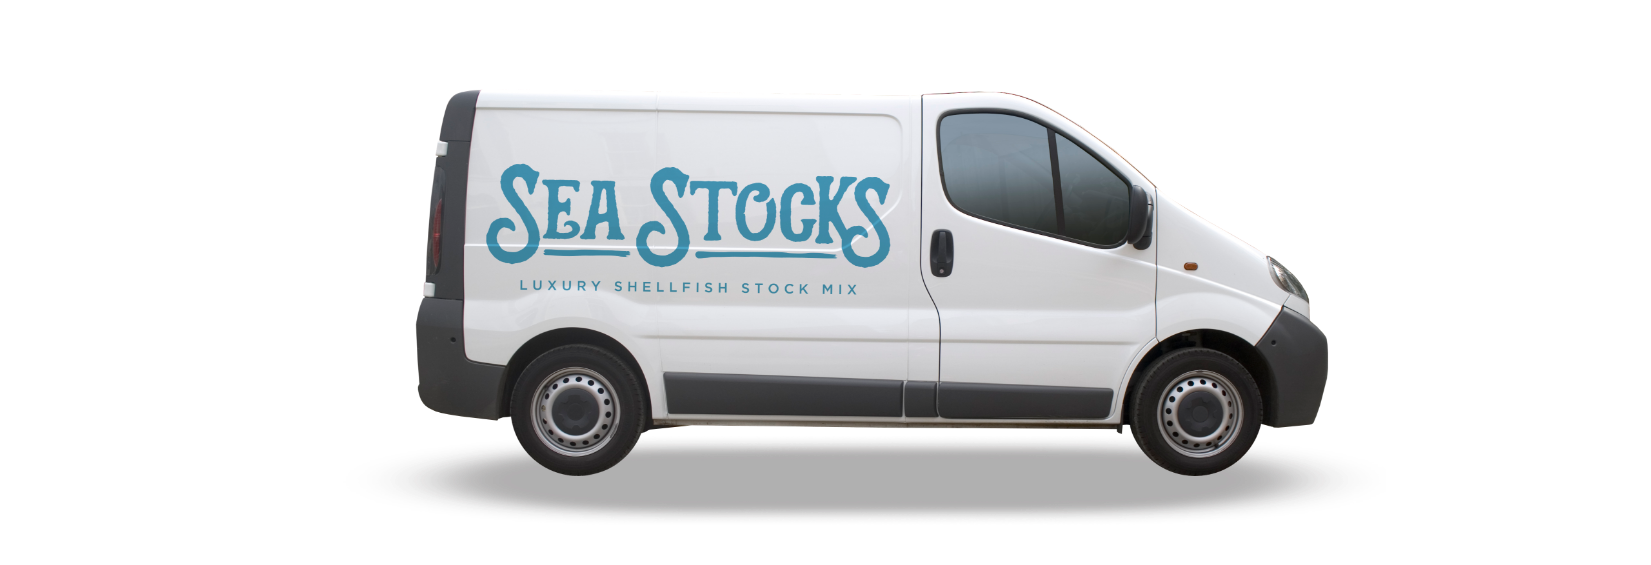 Sea Stocks image